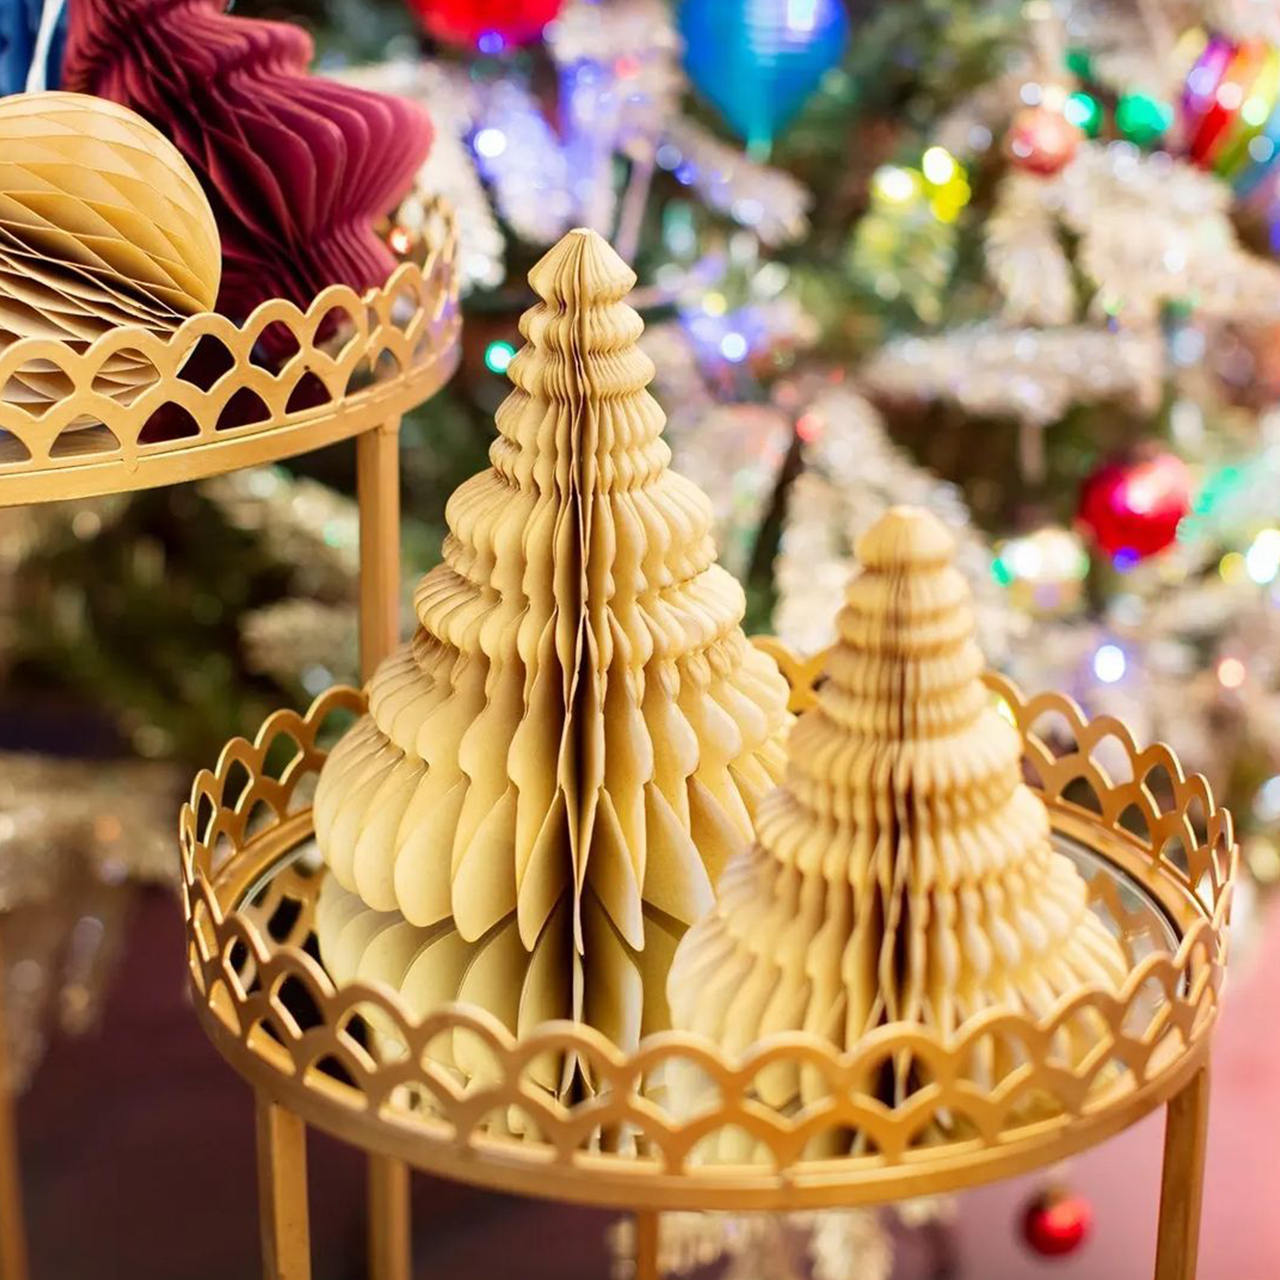  Nordic Ware Holiday Bundt Tree Pan: Christmas Tree